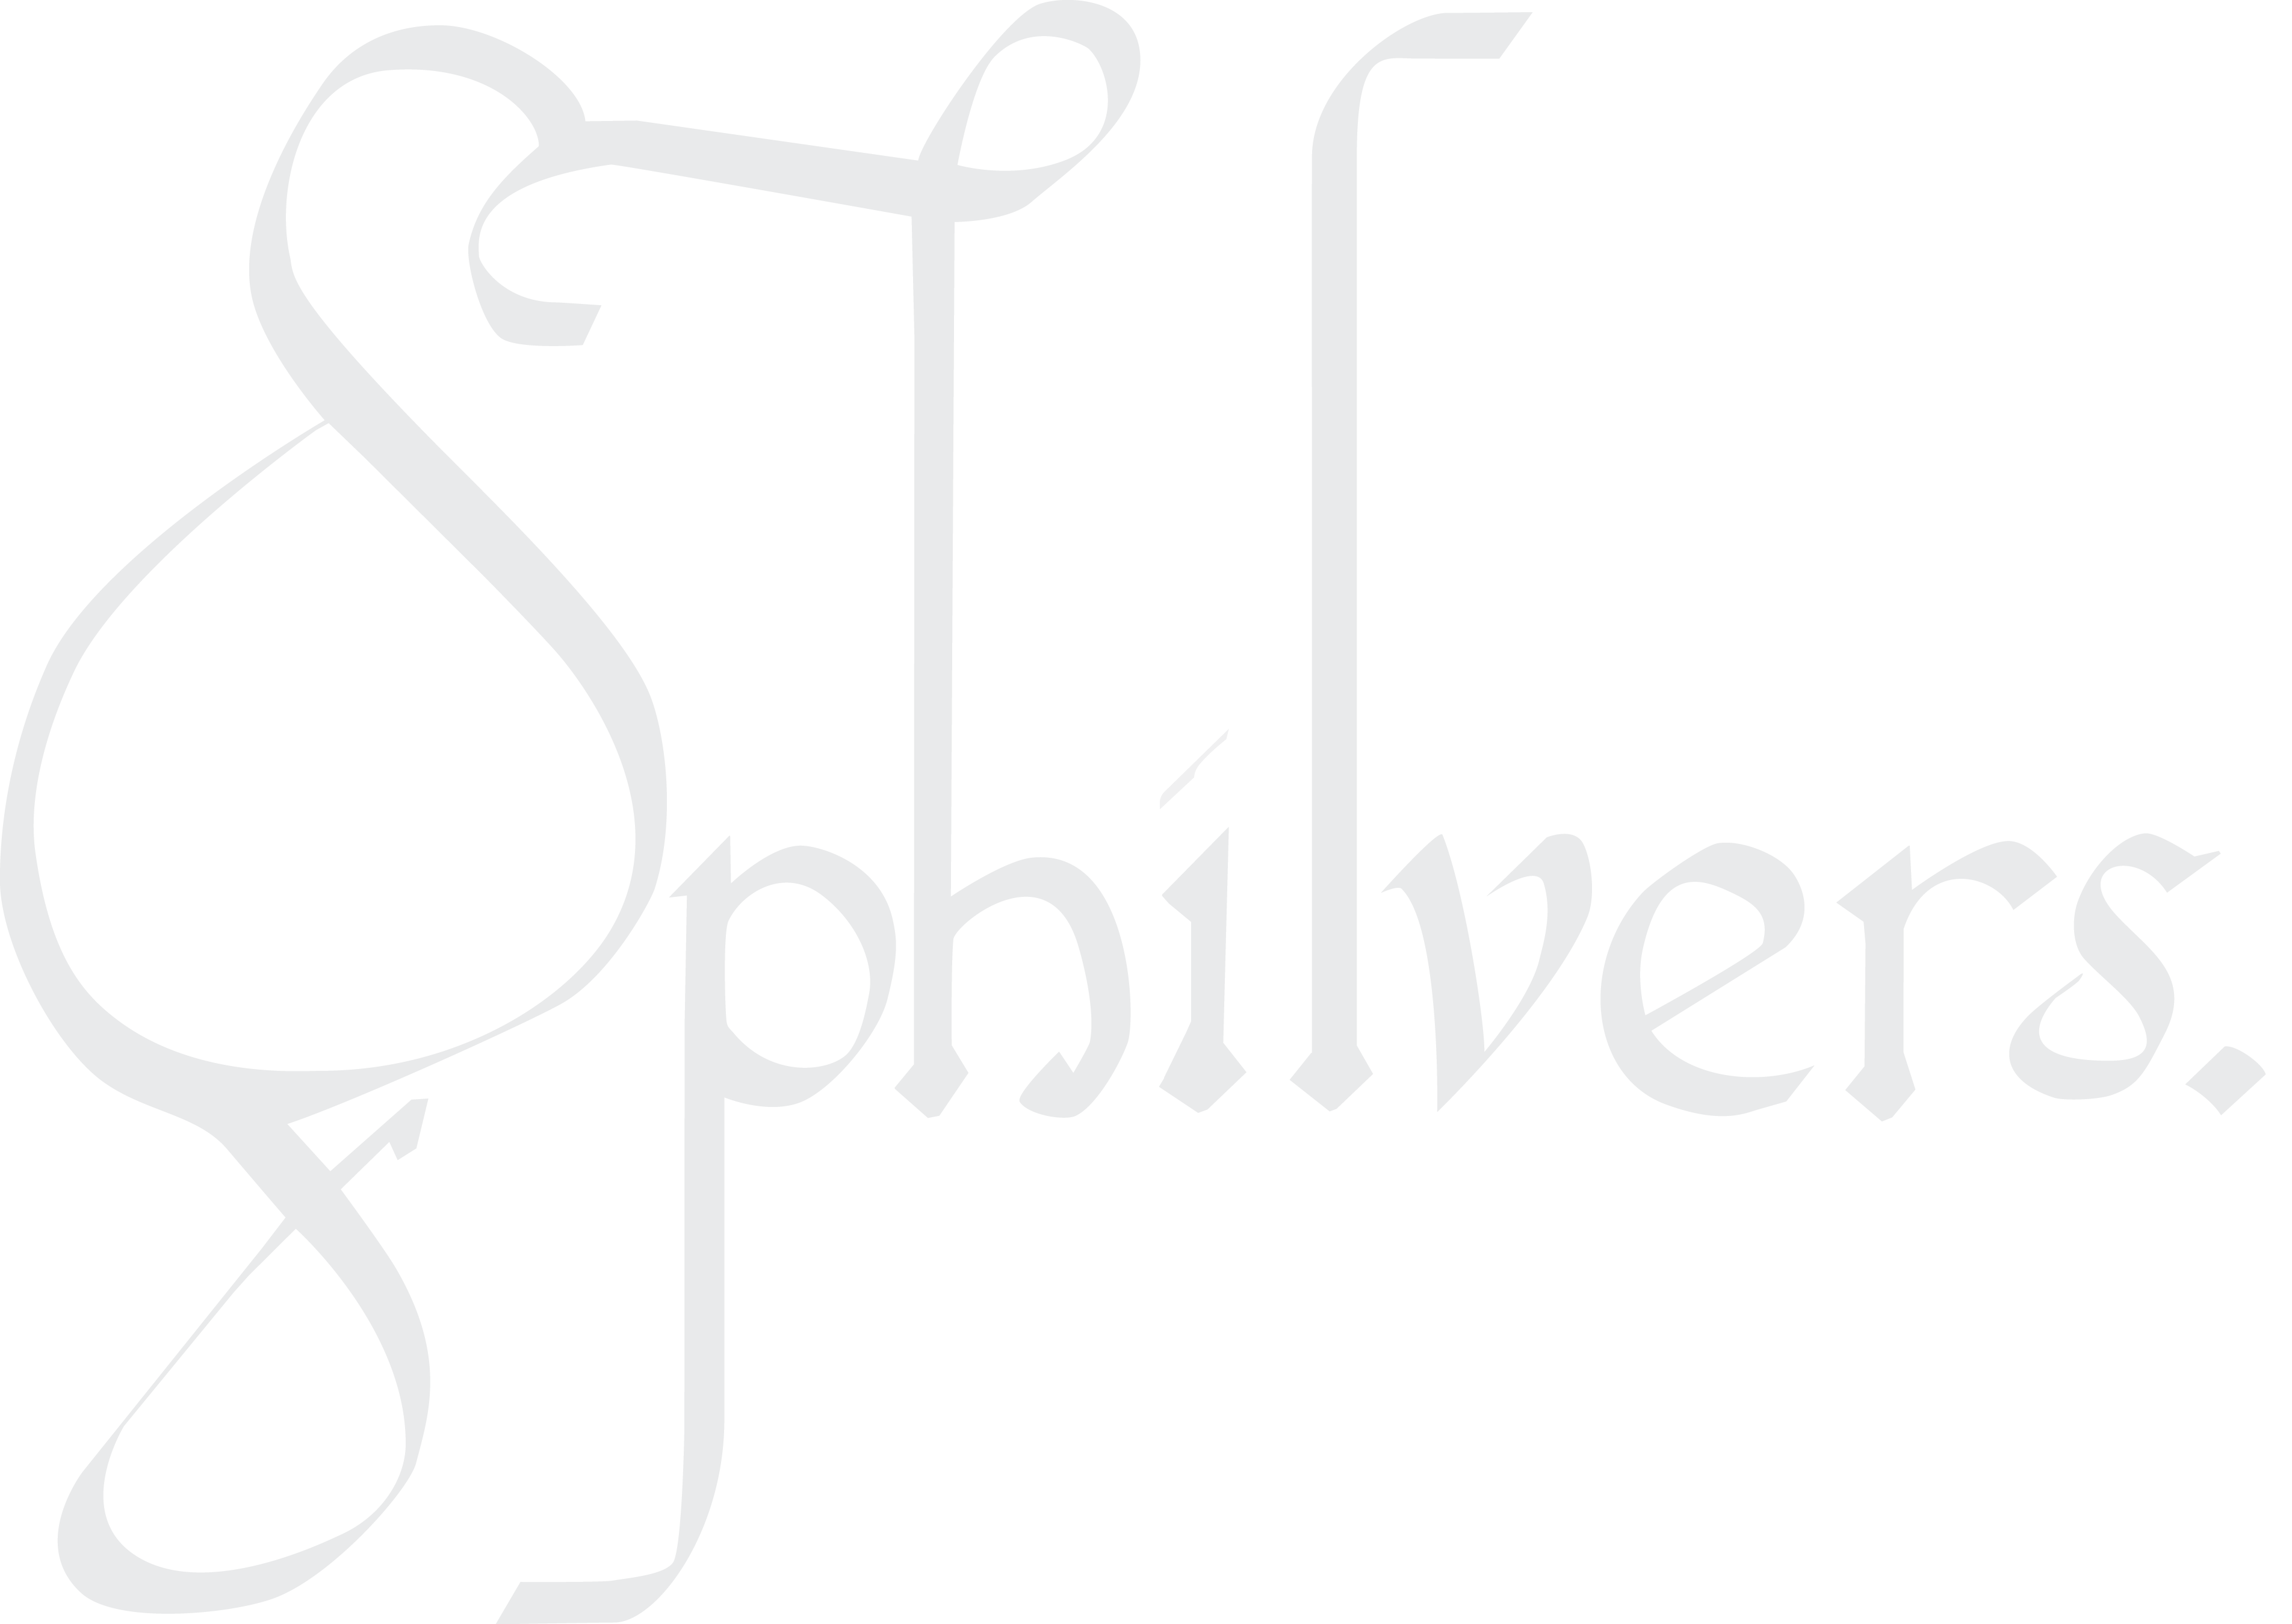 Sphilvers Jewellery Logo